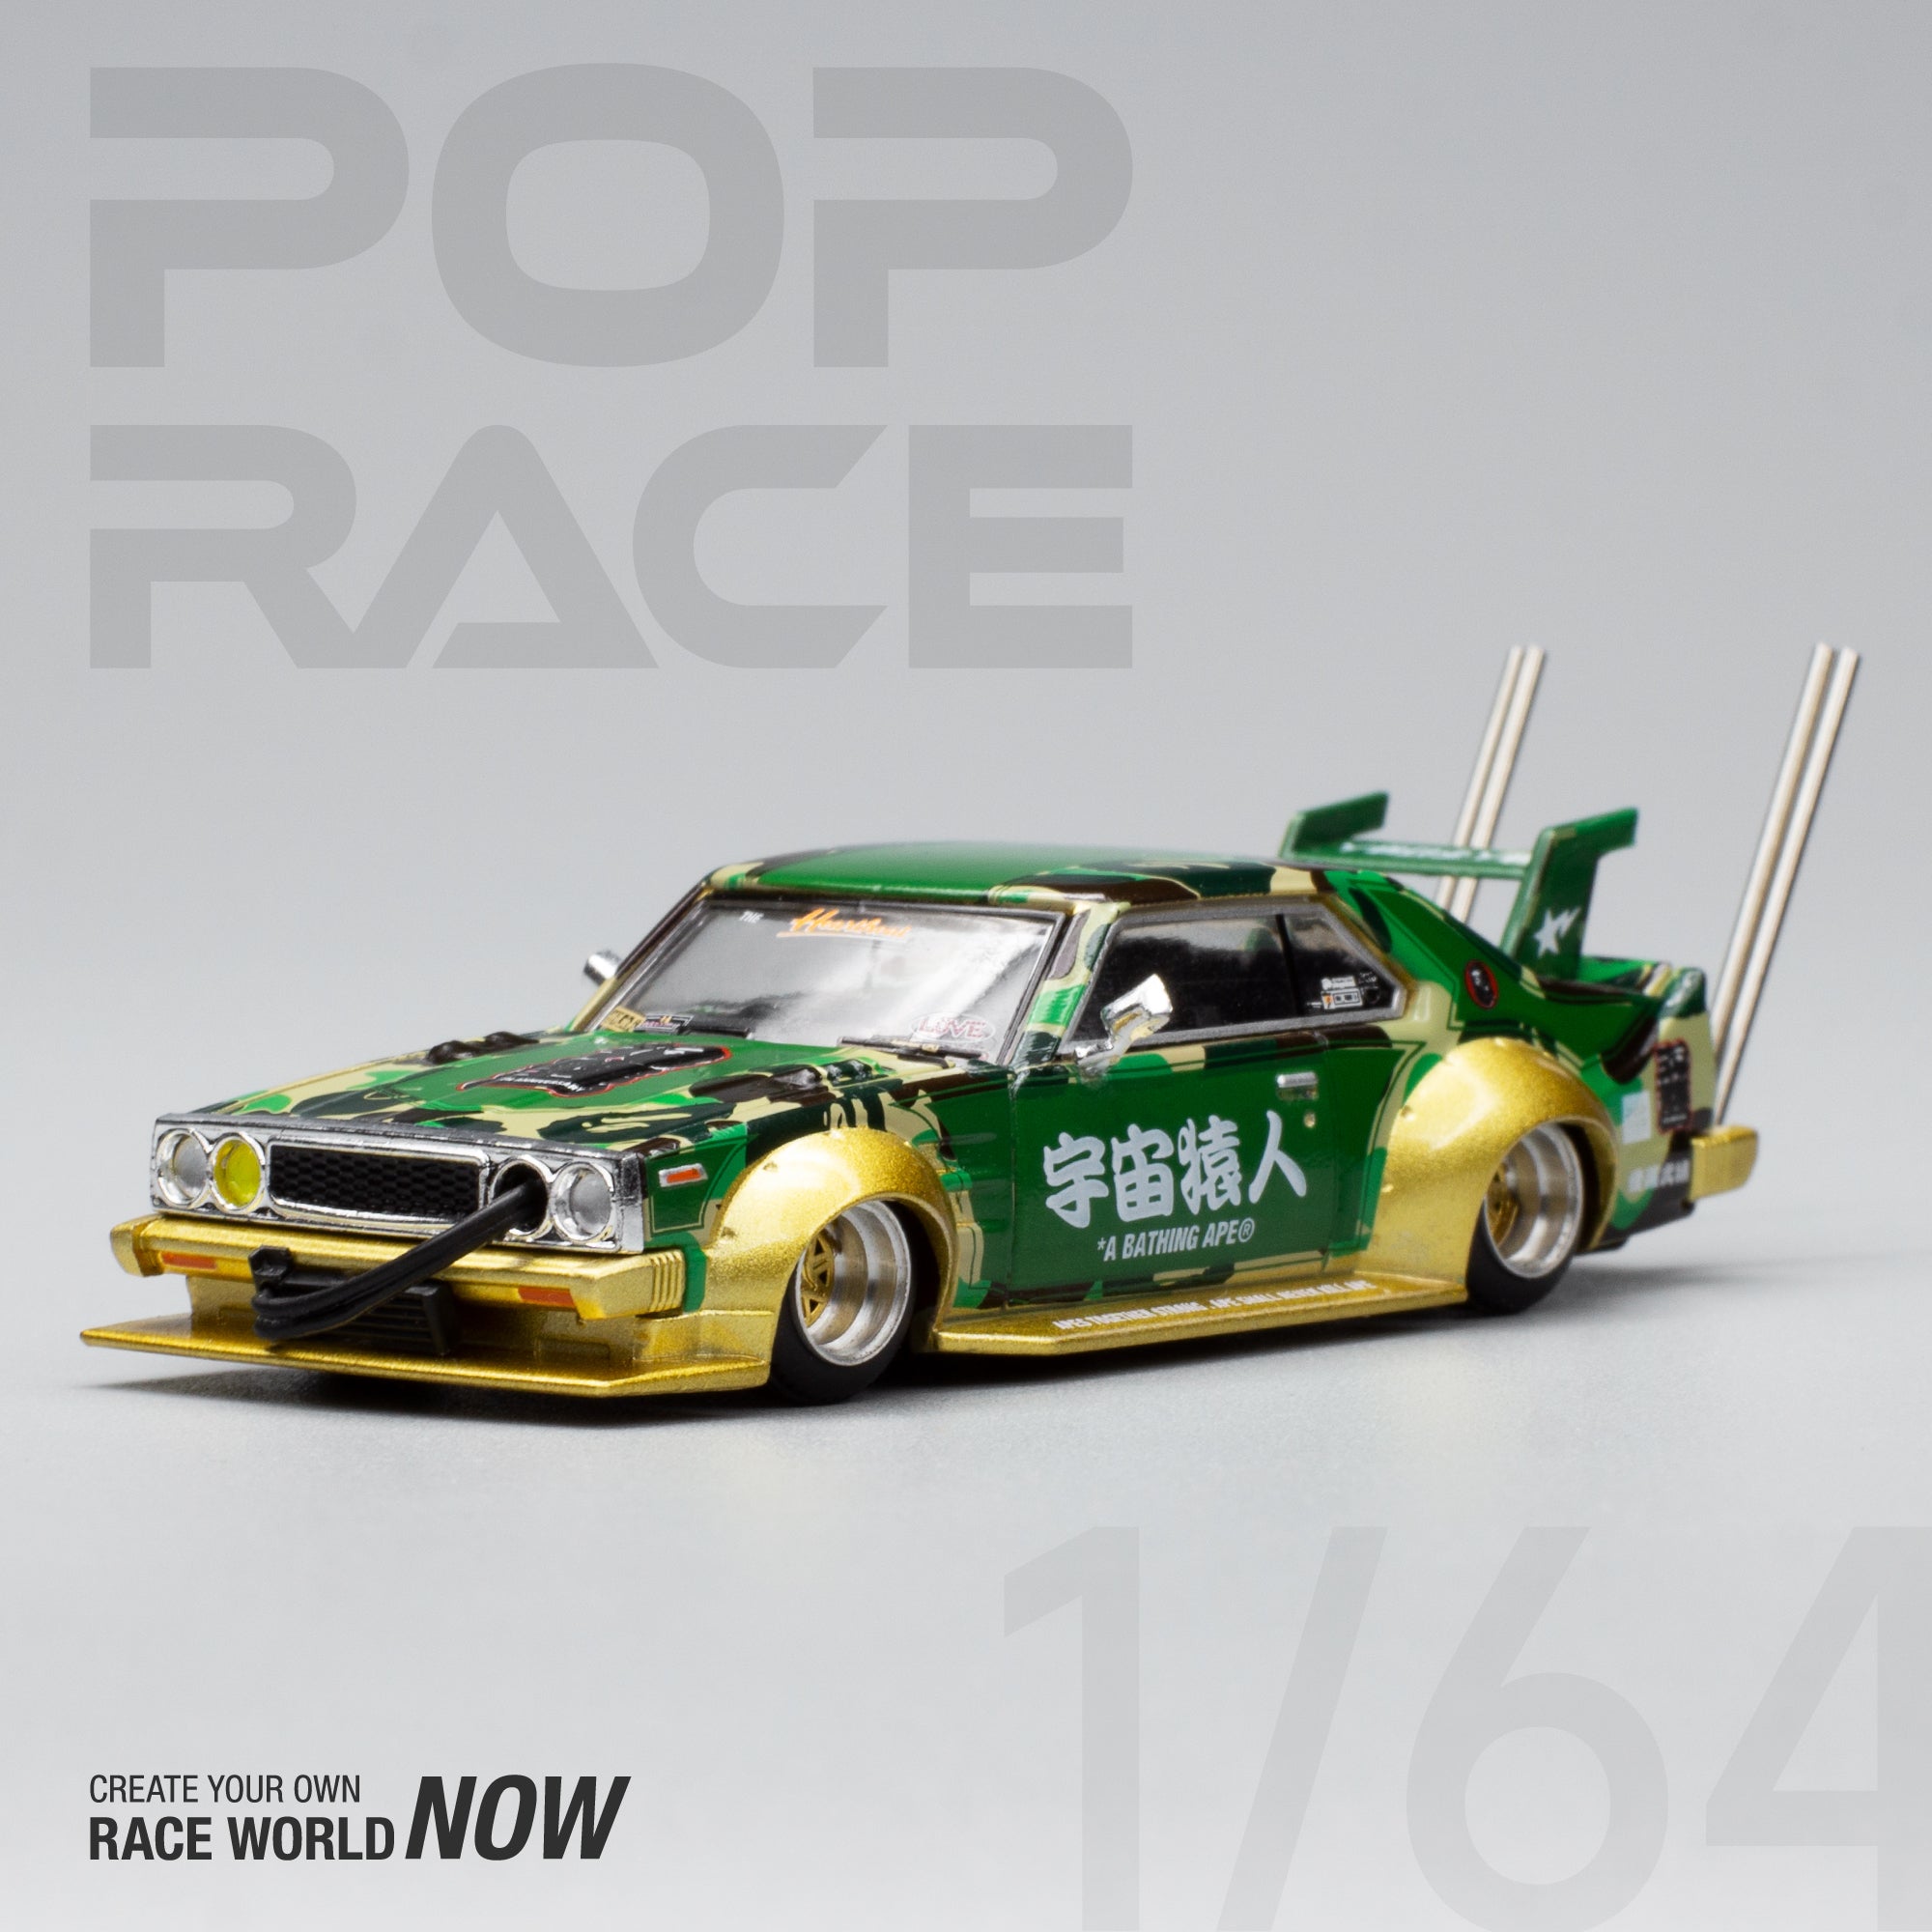 Pop Race 1:64 Diecast Model Araba